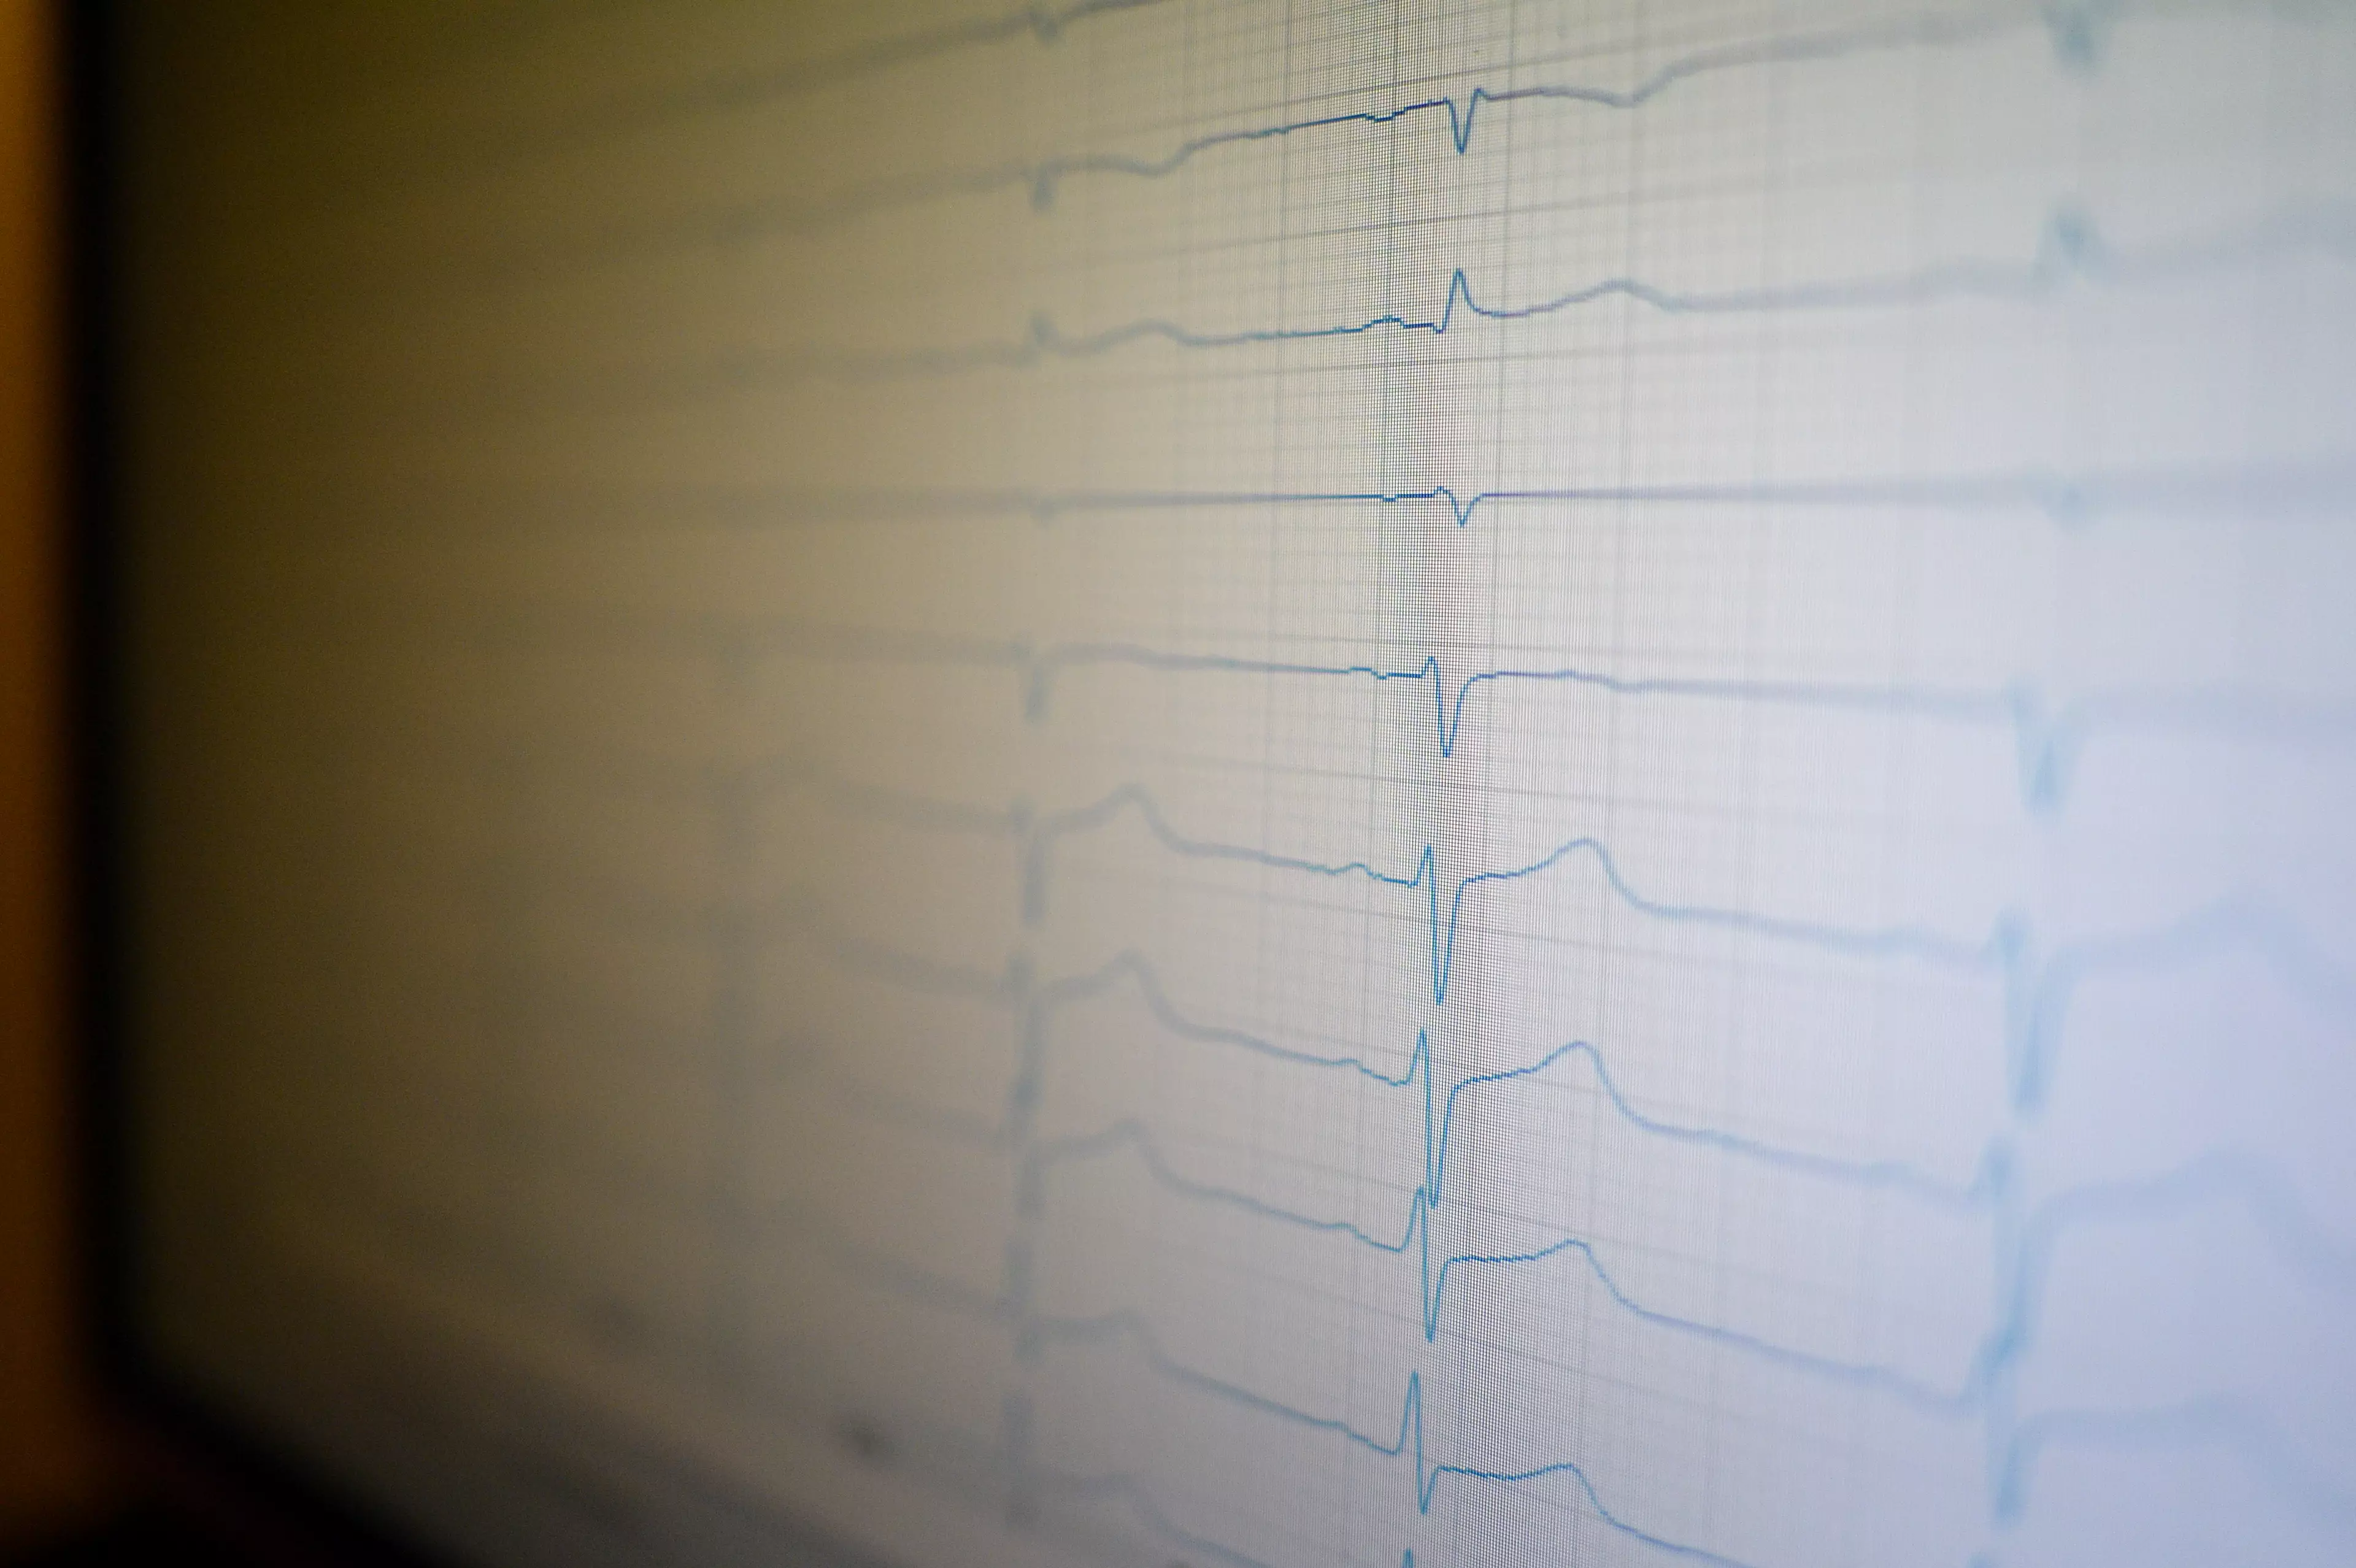 An ECG machine monitoring someone's heart.